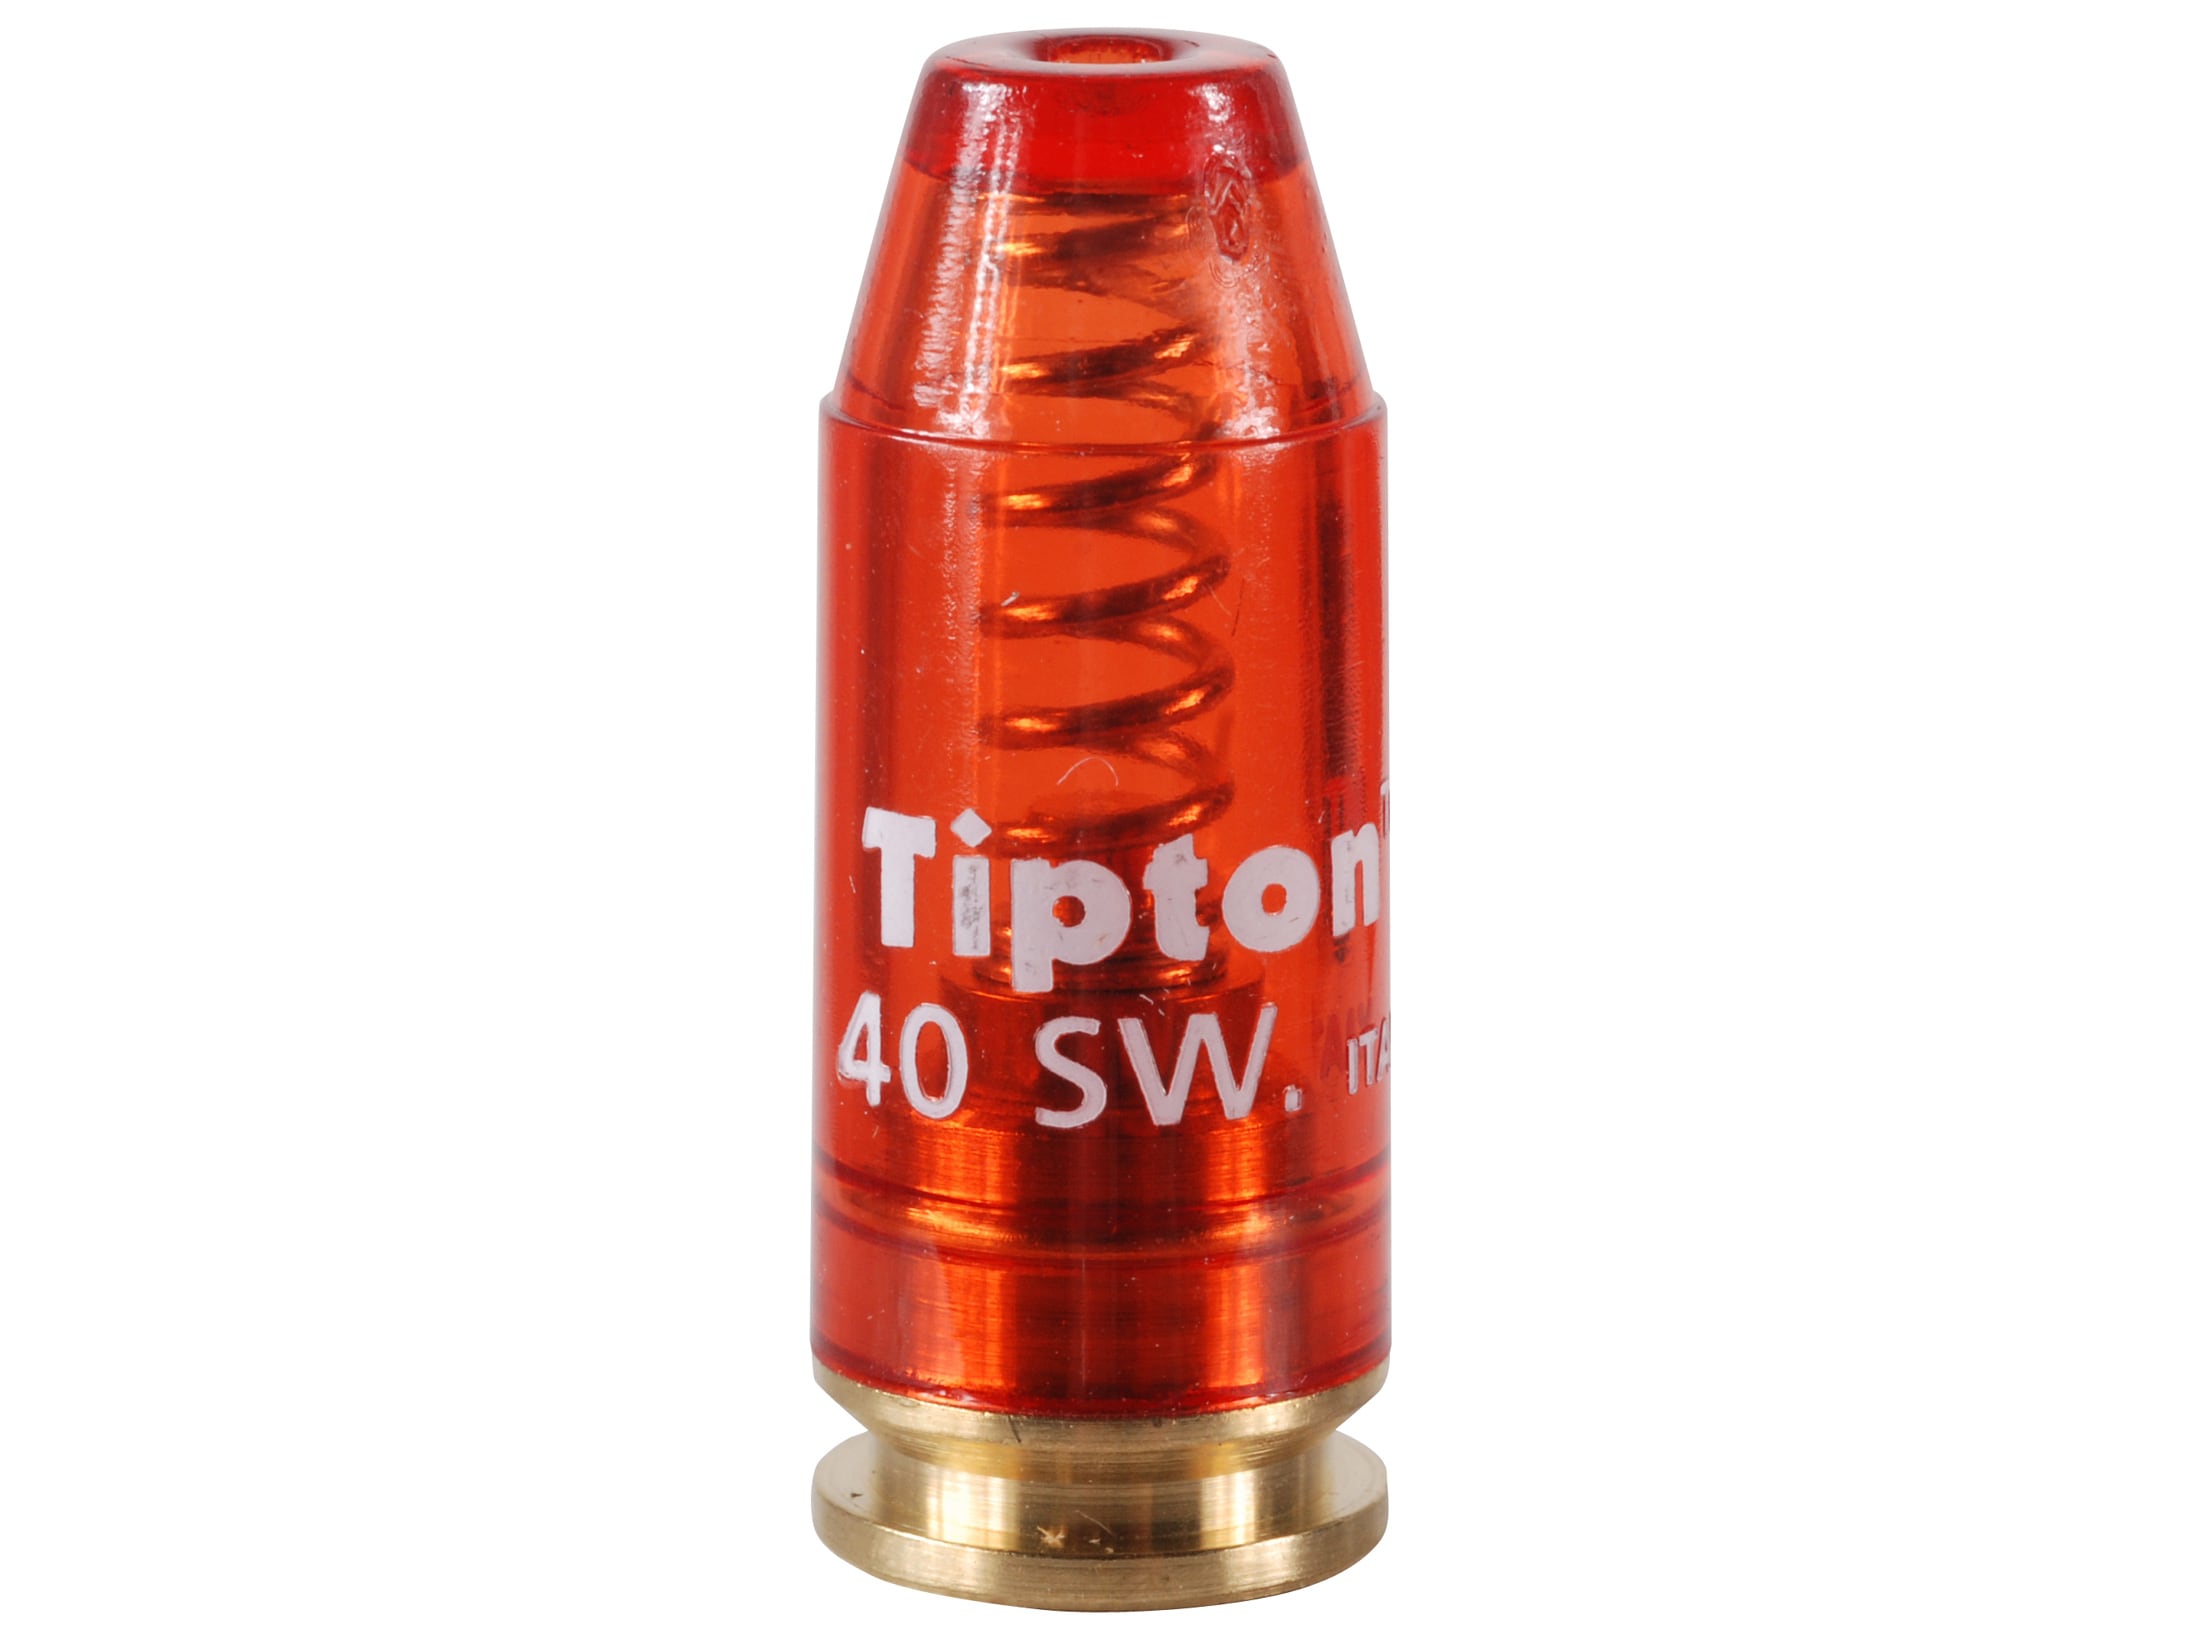 Tipton Practice Training Dummy Rounds Snap Caps For 12 Gauge Shotgun 2 Pack 